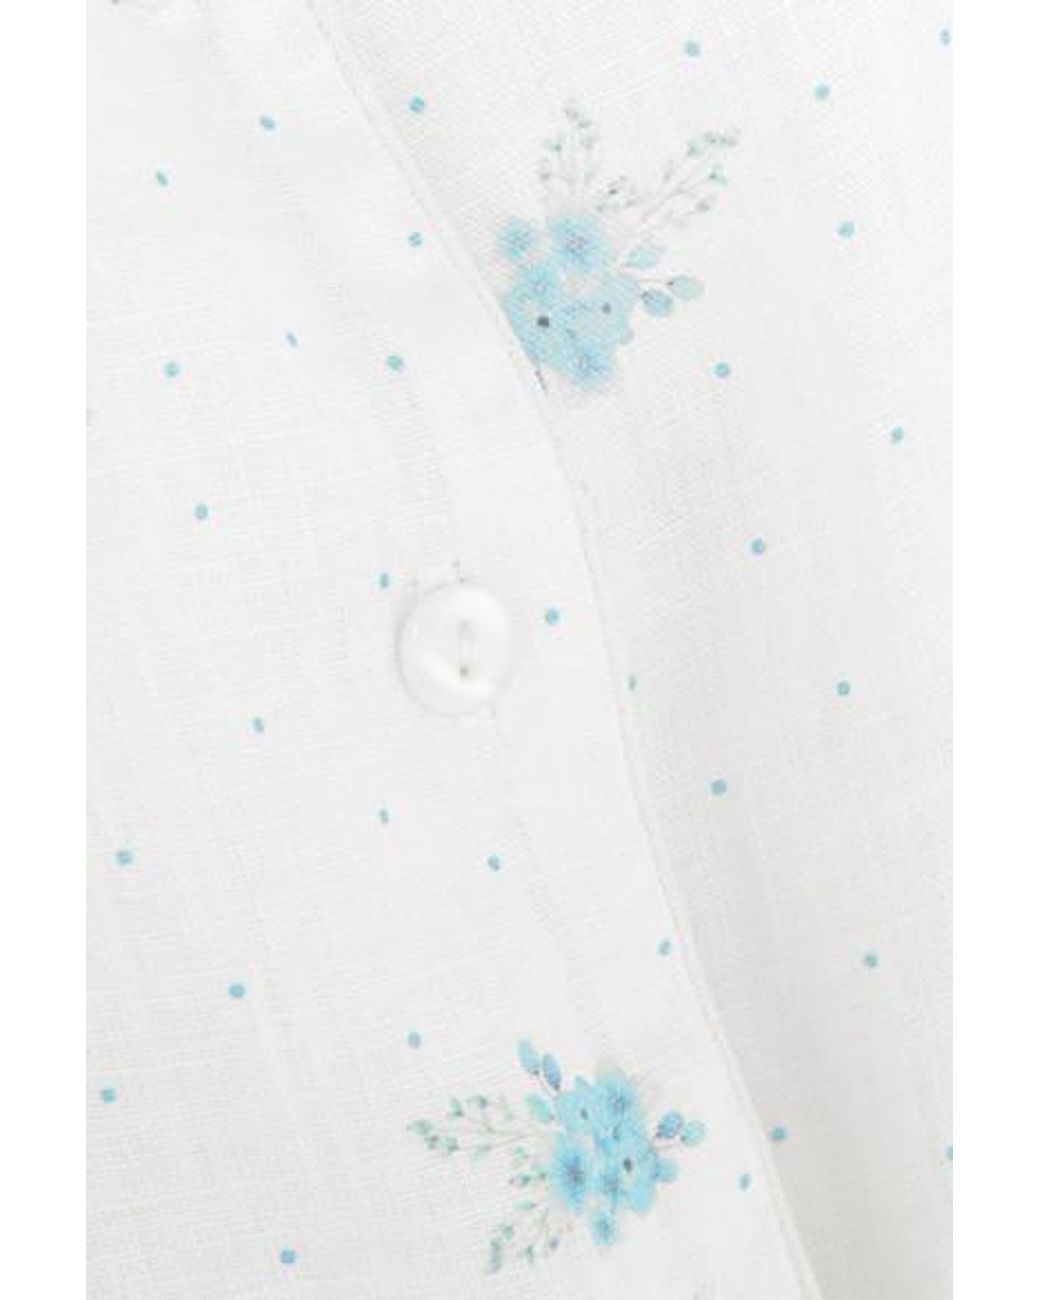 Sleeper Ruffled Floral-print Linen Pajama Set in White